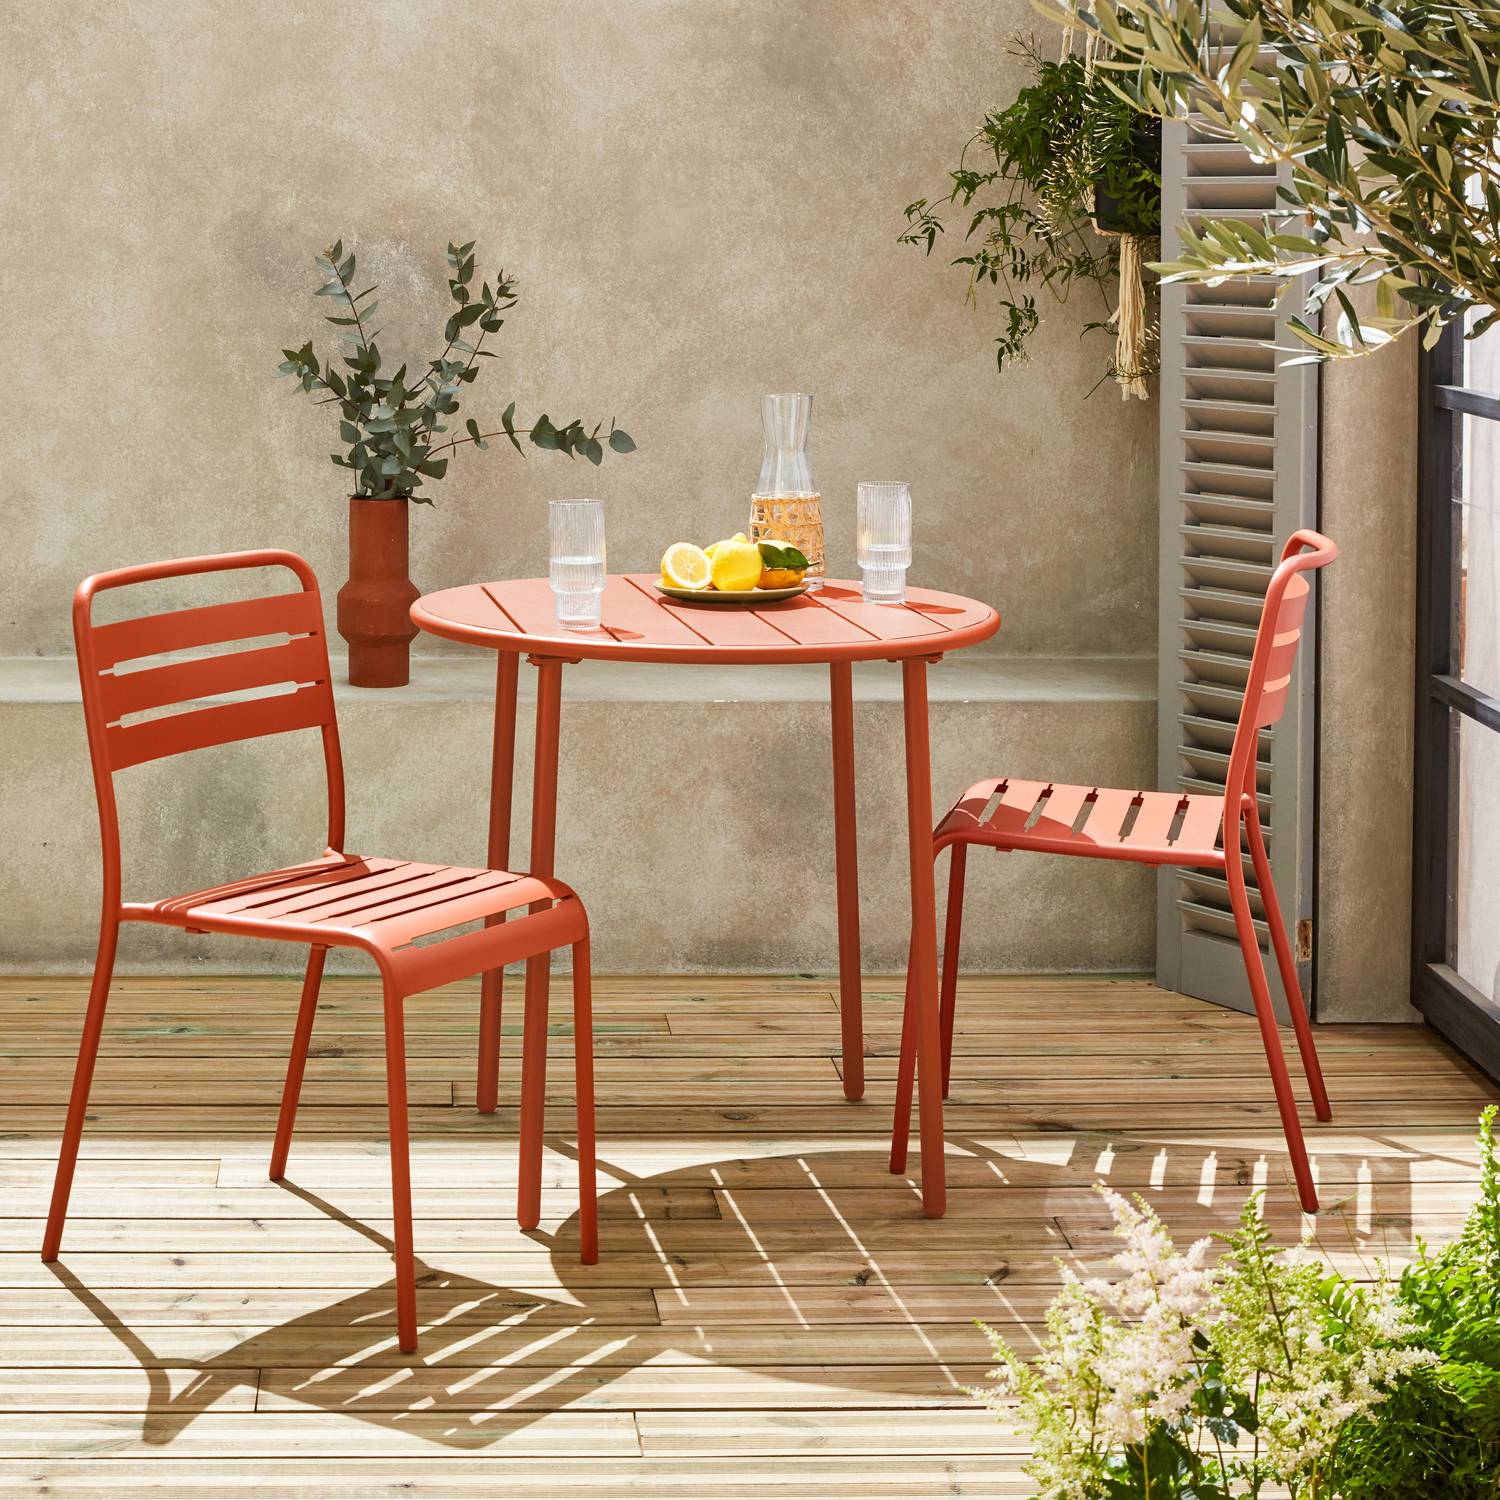 Amélia terracotta metalen tuintafel met 2 stoelen, roestbestendige afwerking Photo1